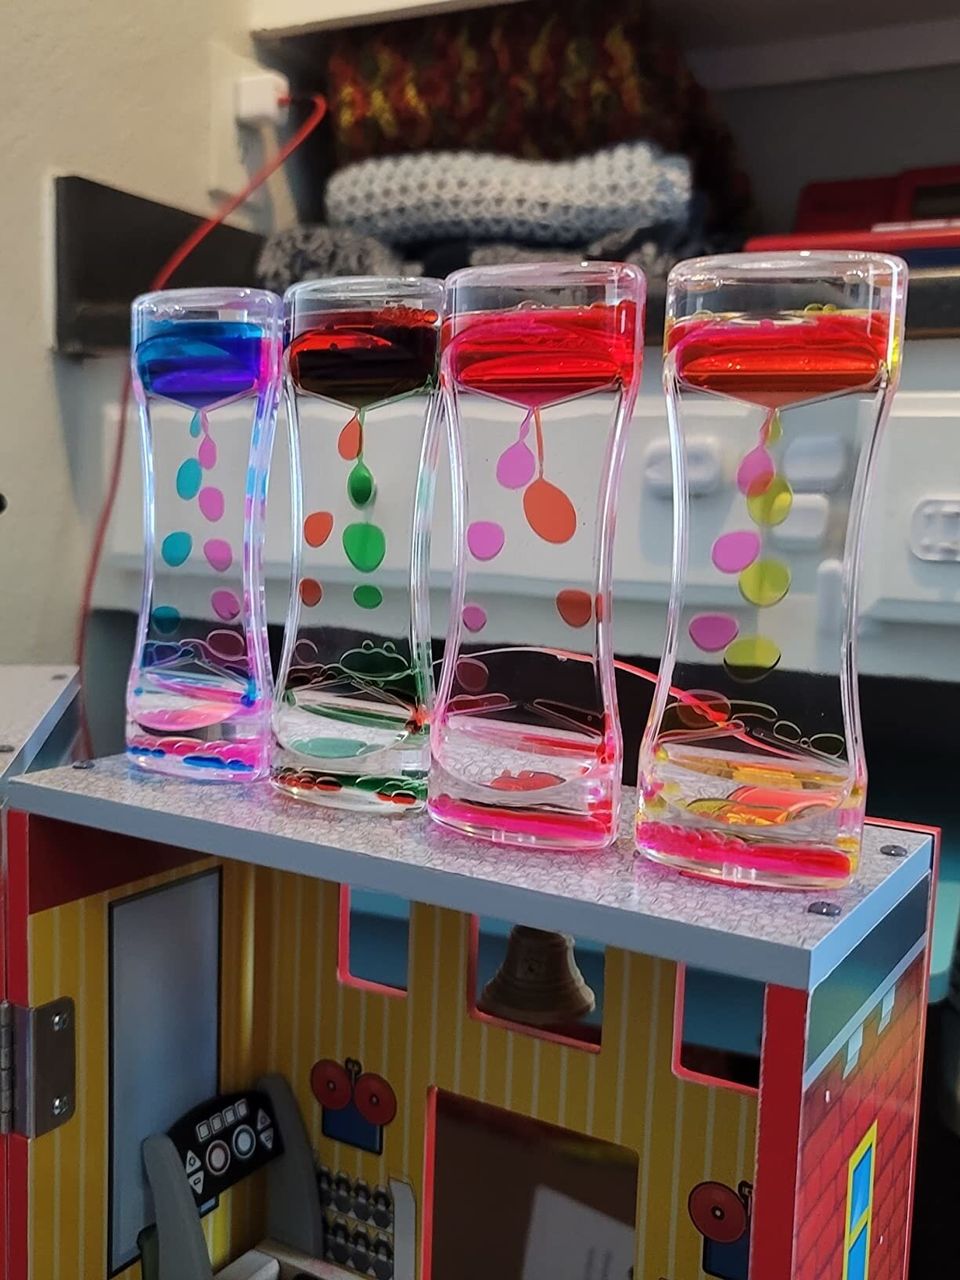 A liquid motion sensory toy